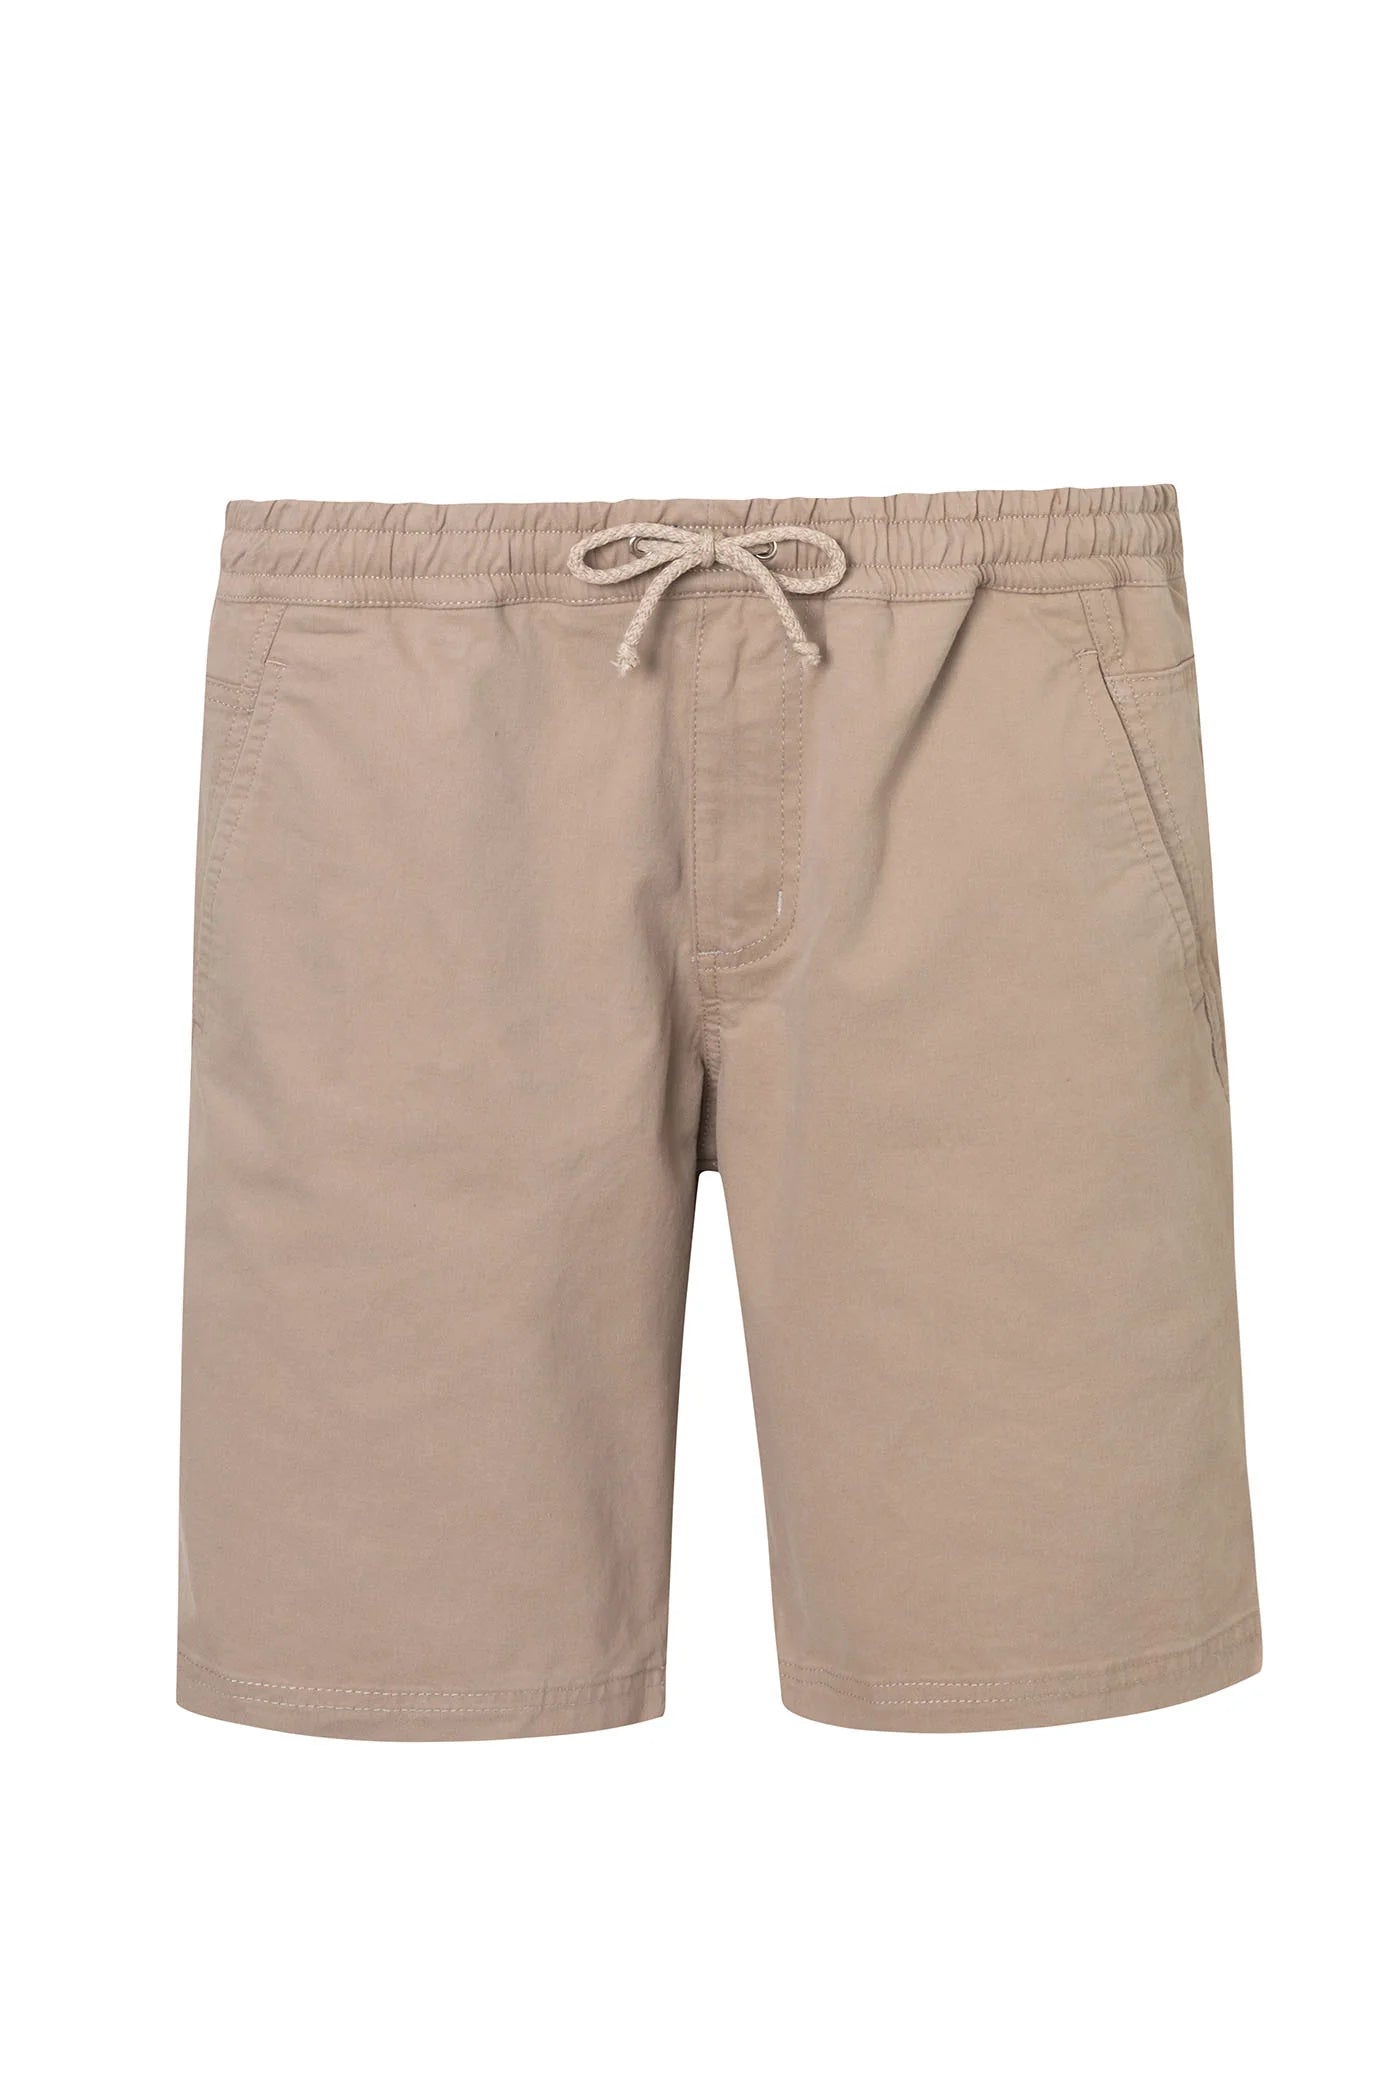 BCI Cotton Casual Shorts Beige